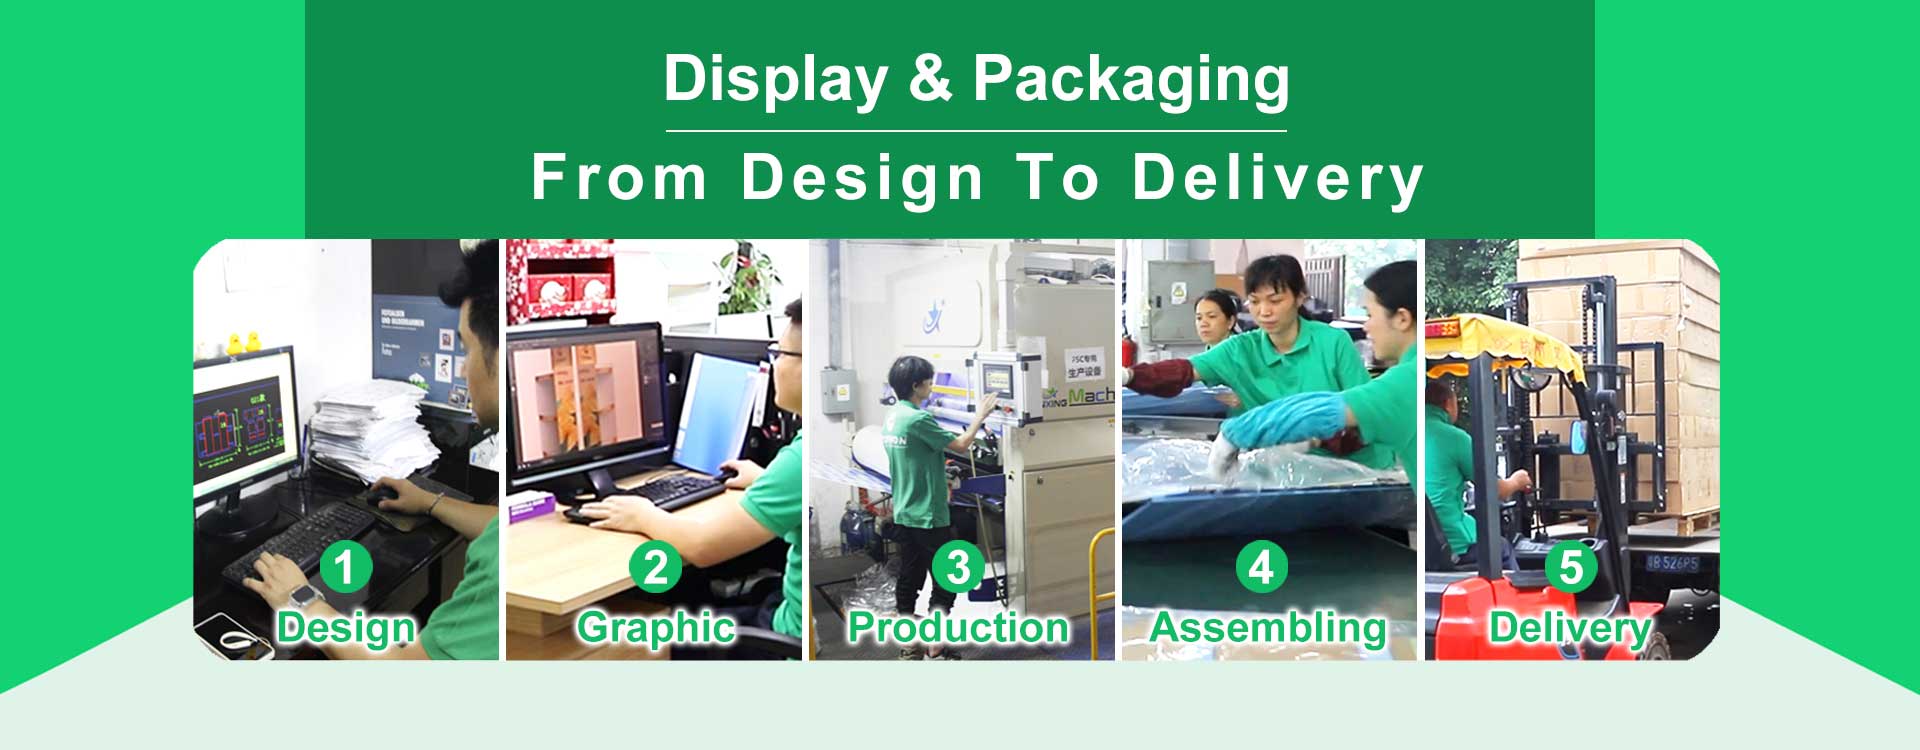 cardboard display manufacture